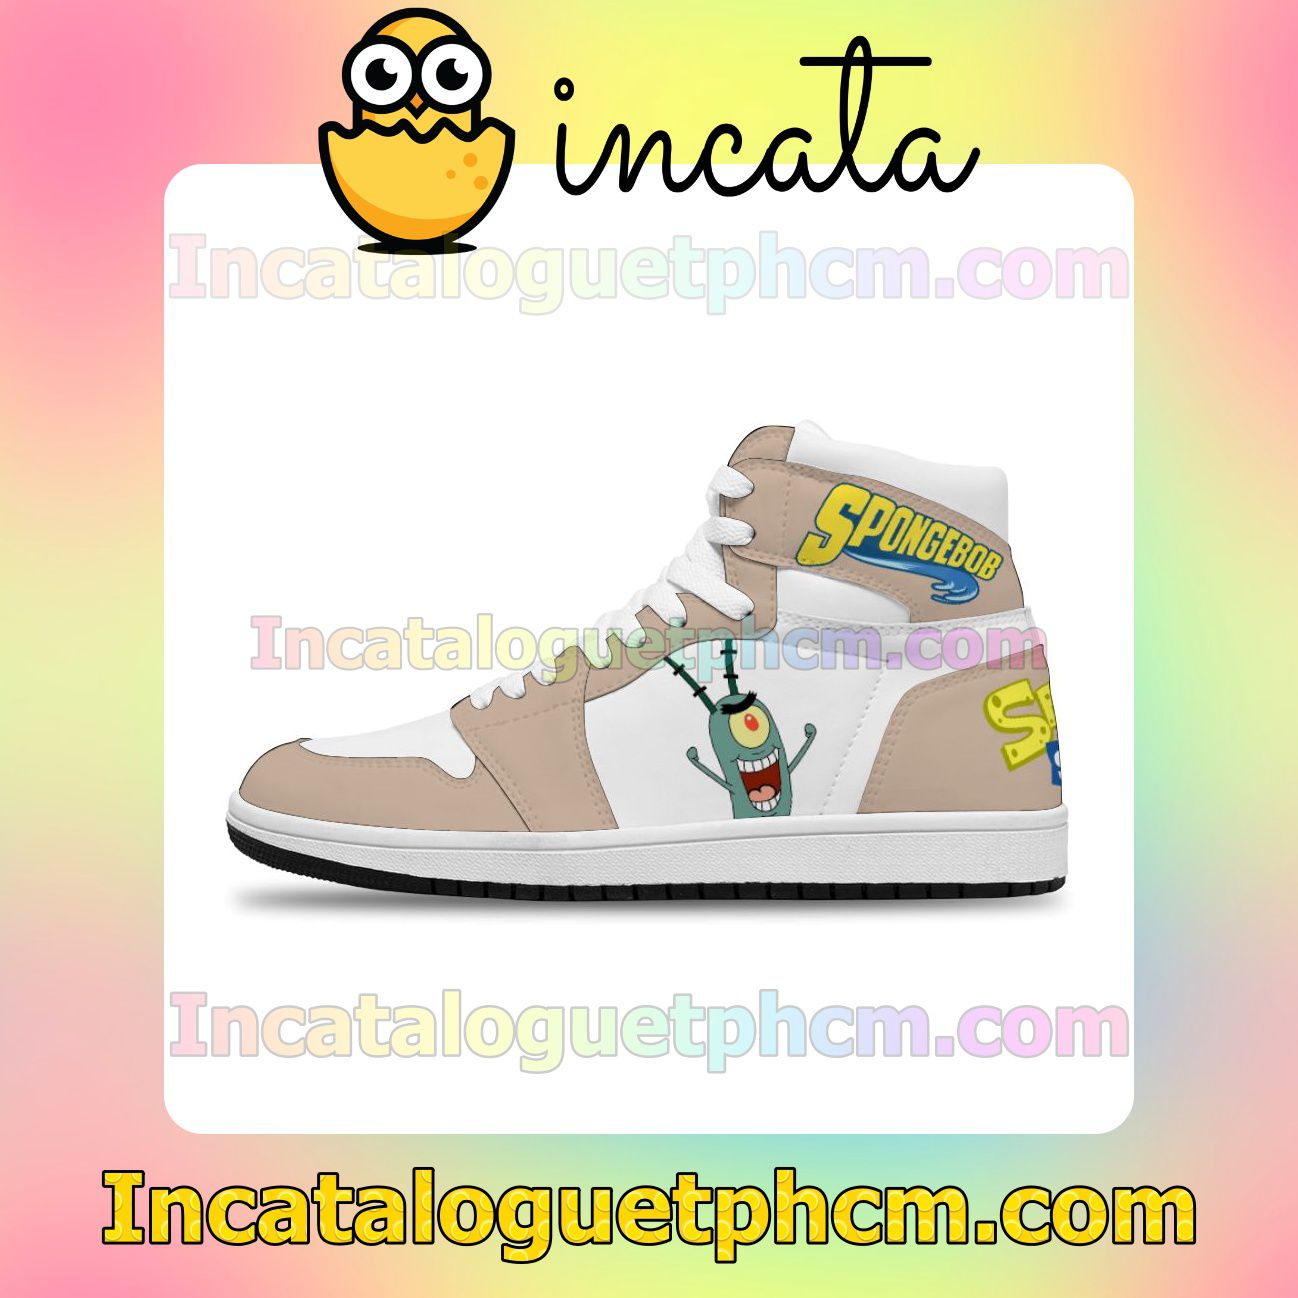 SpongeBob Sheldon James Plankton Jr Air Jordan 1 Inspired Shoes